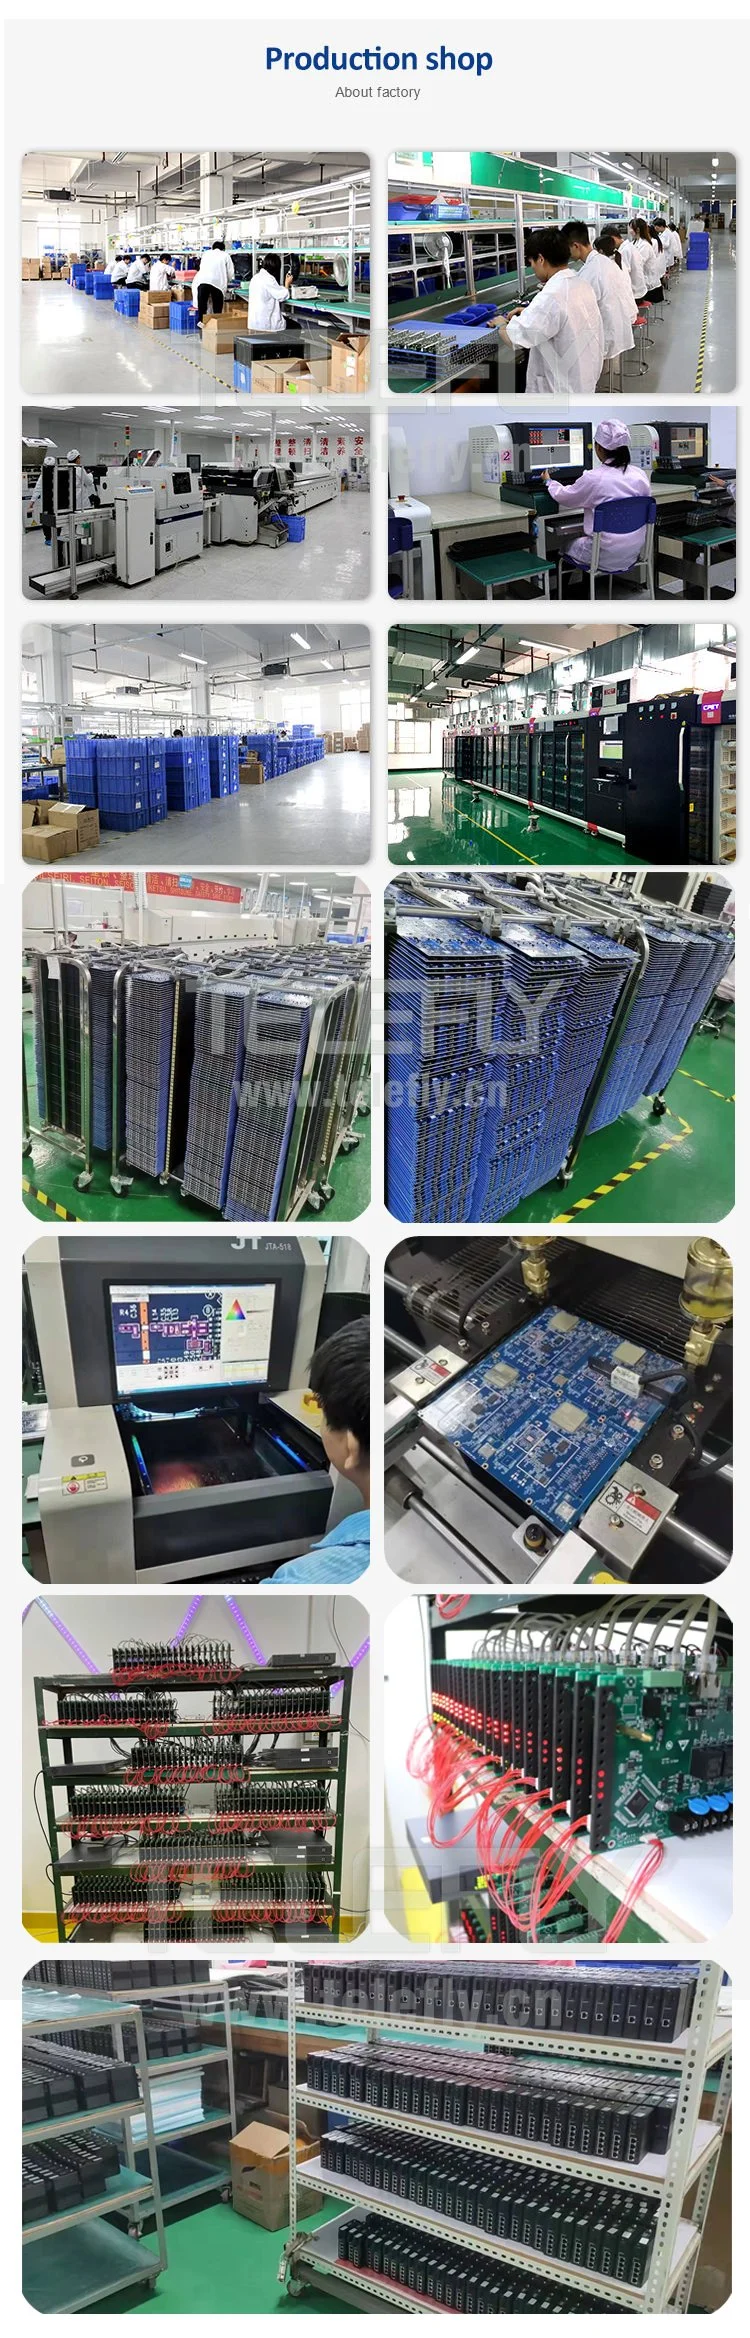 New Original IC Chips Xilinx Xc3s100e-4vqg100c Fpga Spartan-3e Family 100K Gates 2160 Cells 572MHz 90nm (CMOS) Technology 1.2V 100-Pin Vtqfp in Stock